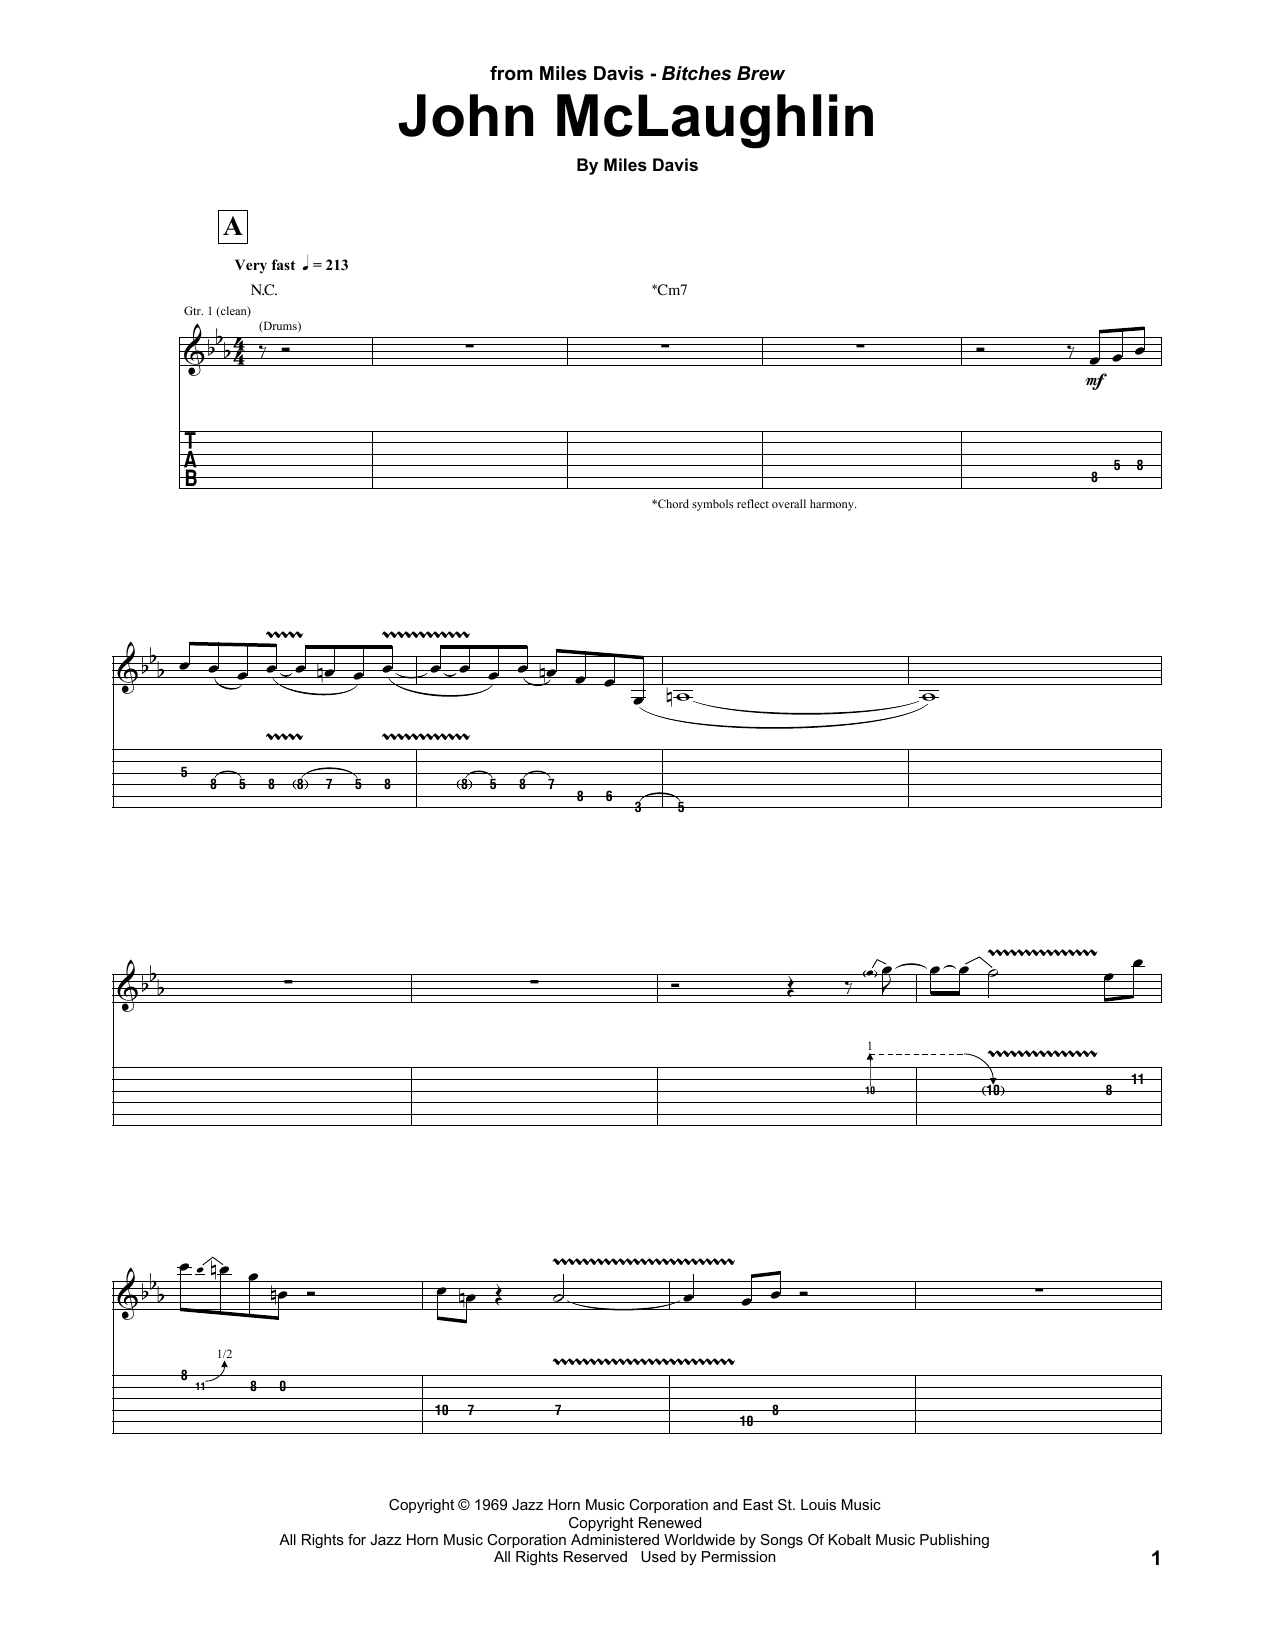 Miles Davis John McLaughlin Sheet Music Notes & Chords for Guitar Tab - Download or Print PDF